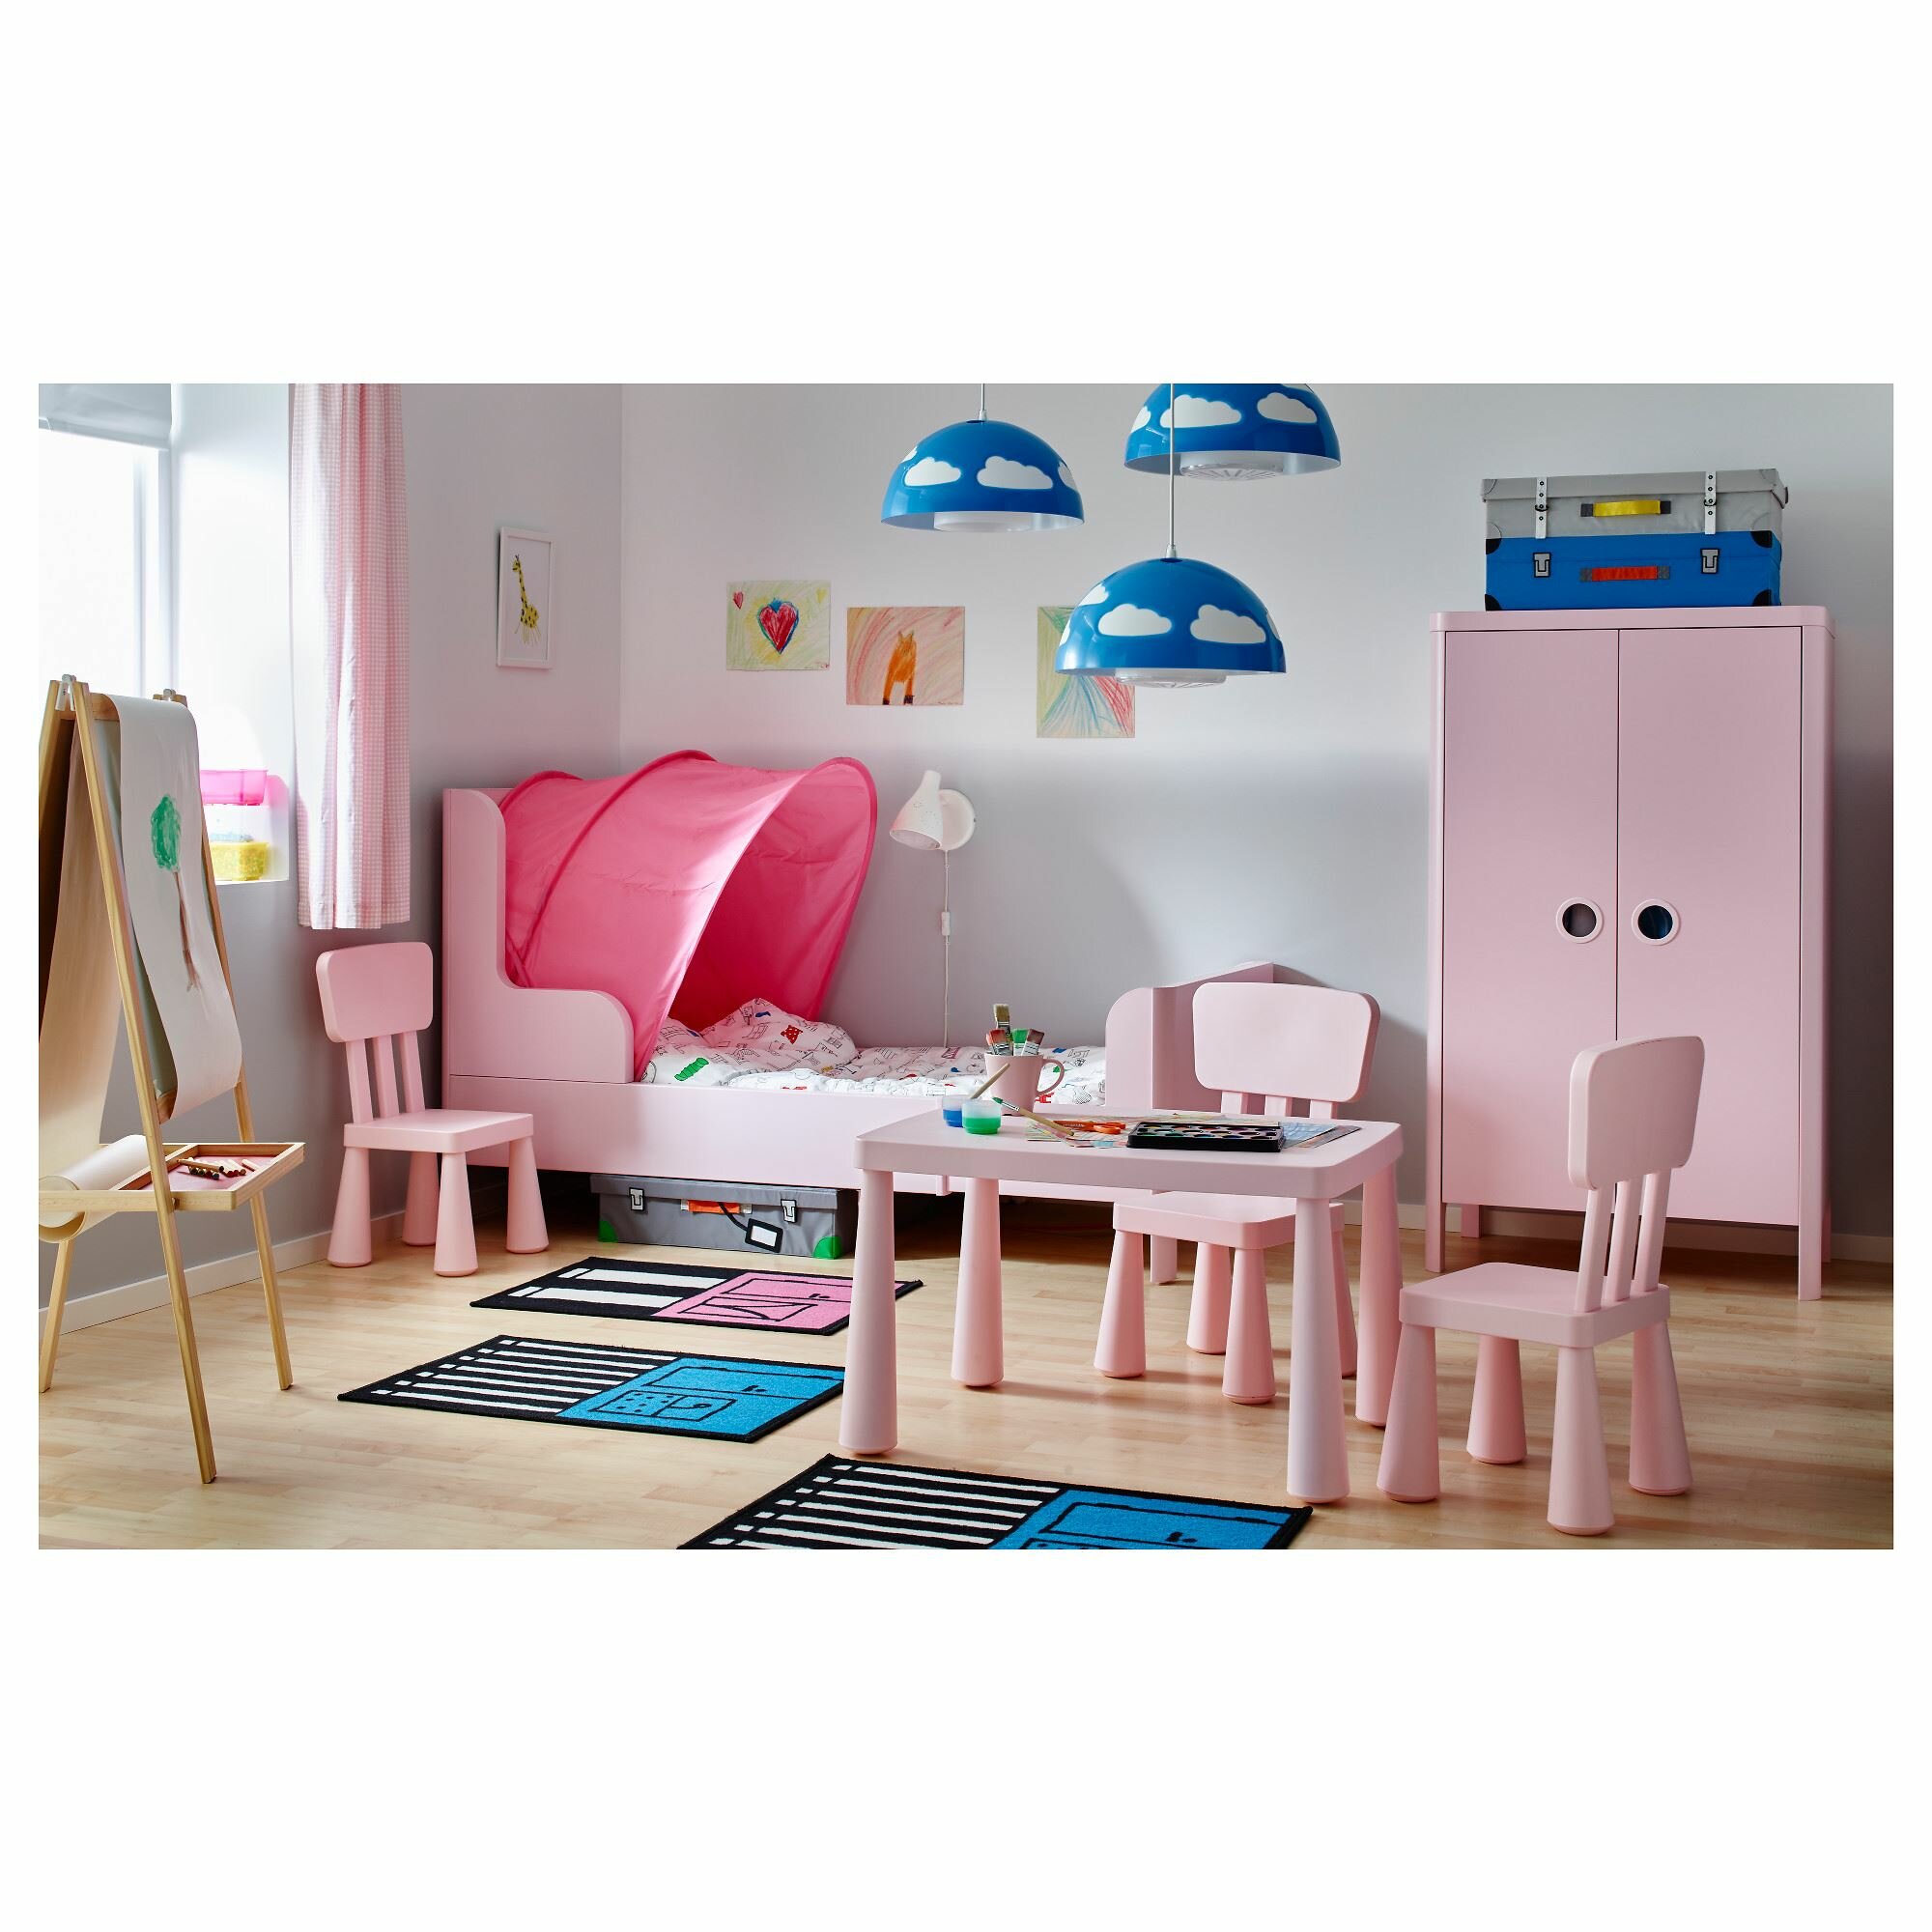 Икея / IKEA SUFFLETT, суффлетт, балдахин, розовый, 70/80/90